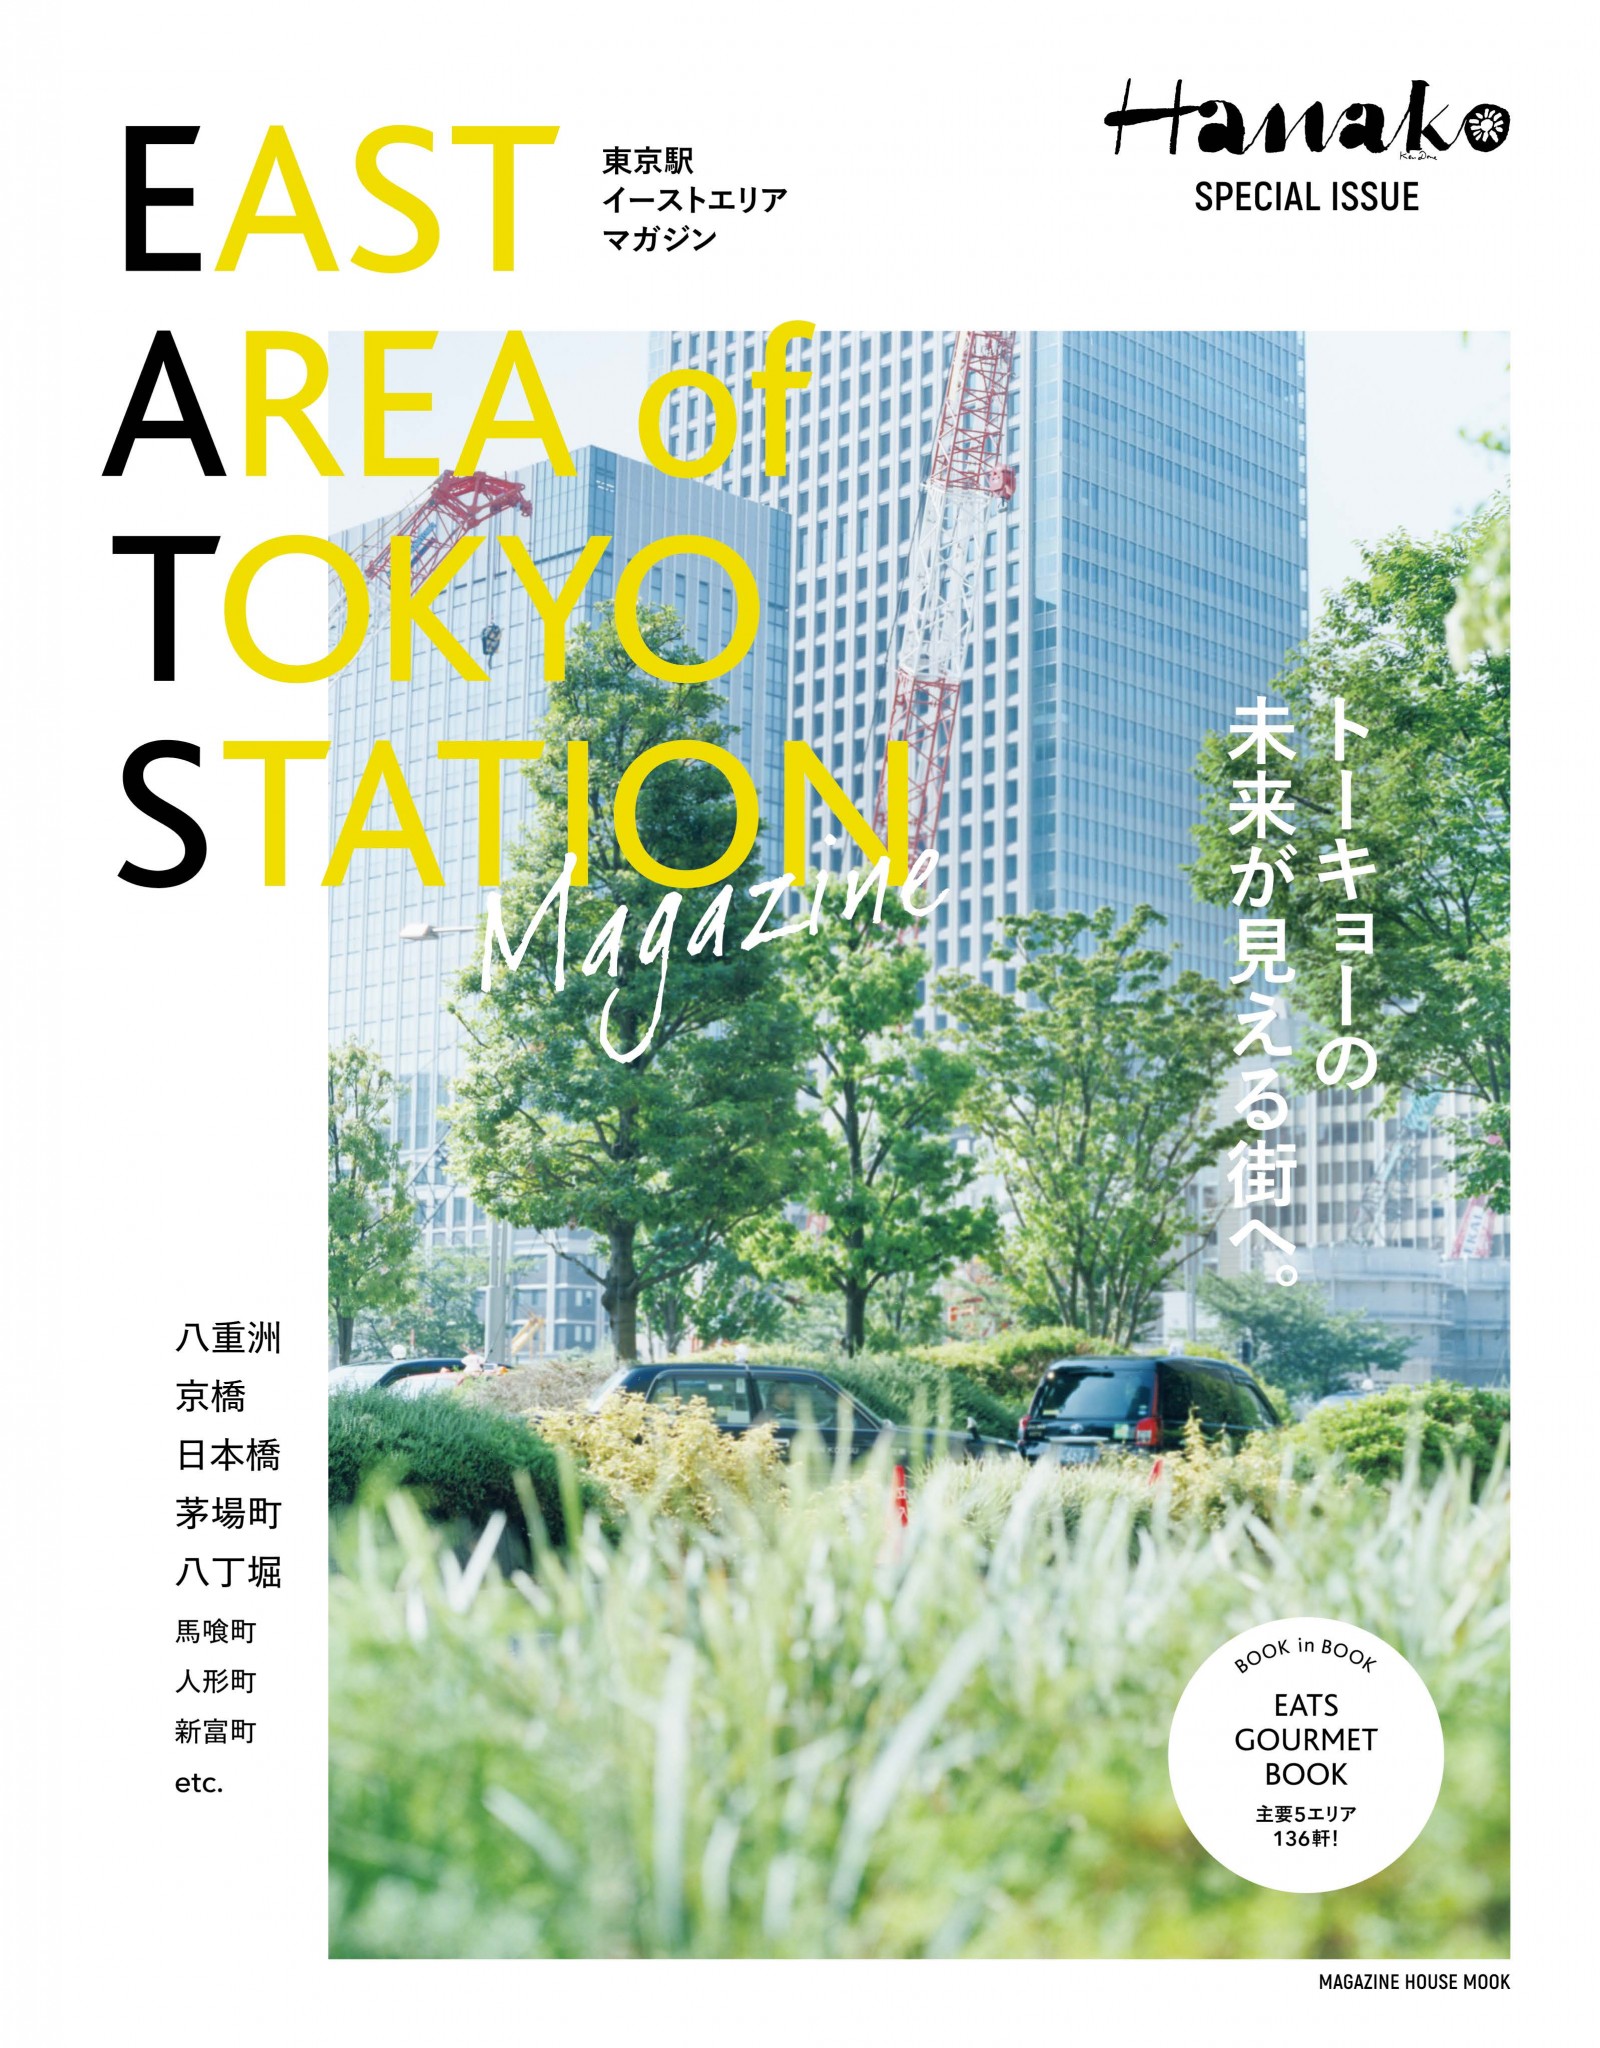 Hanako　East Area of Tokyo Station Magazine